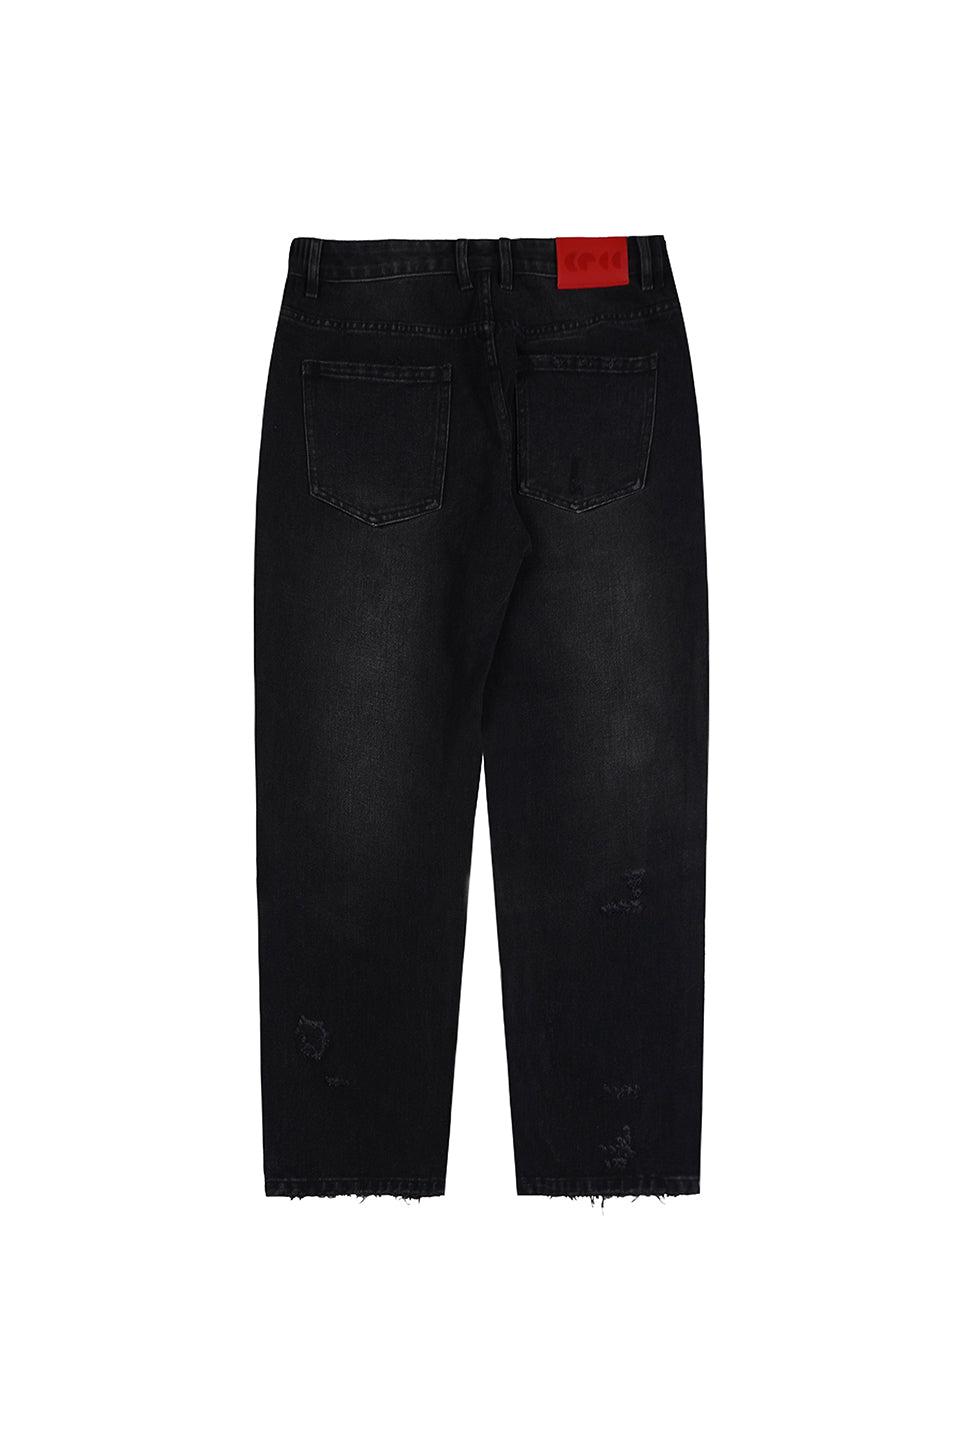 Moonstone Black Jeans